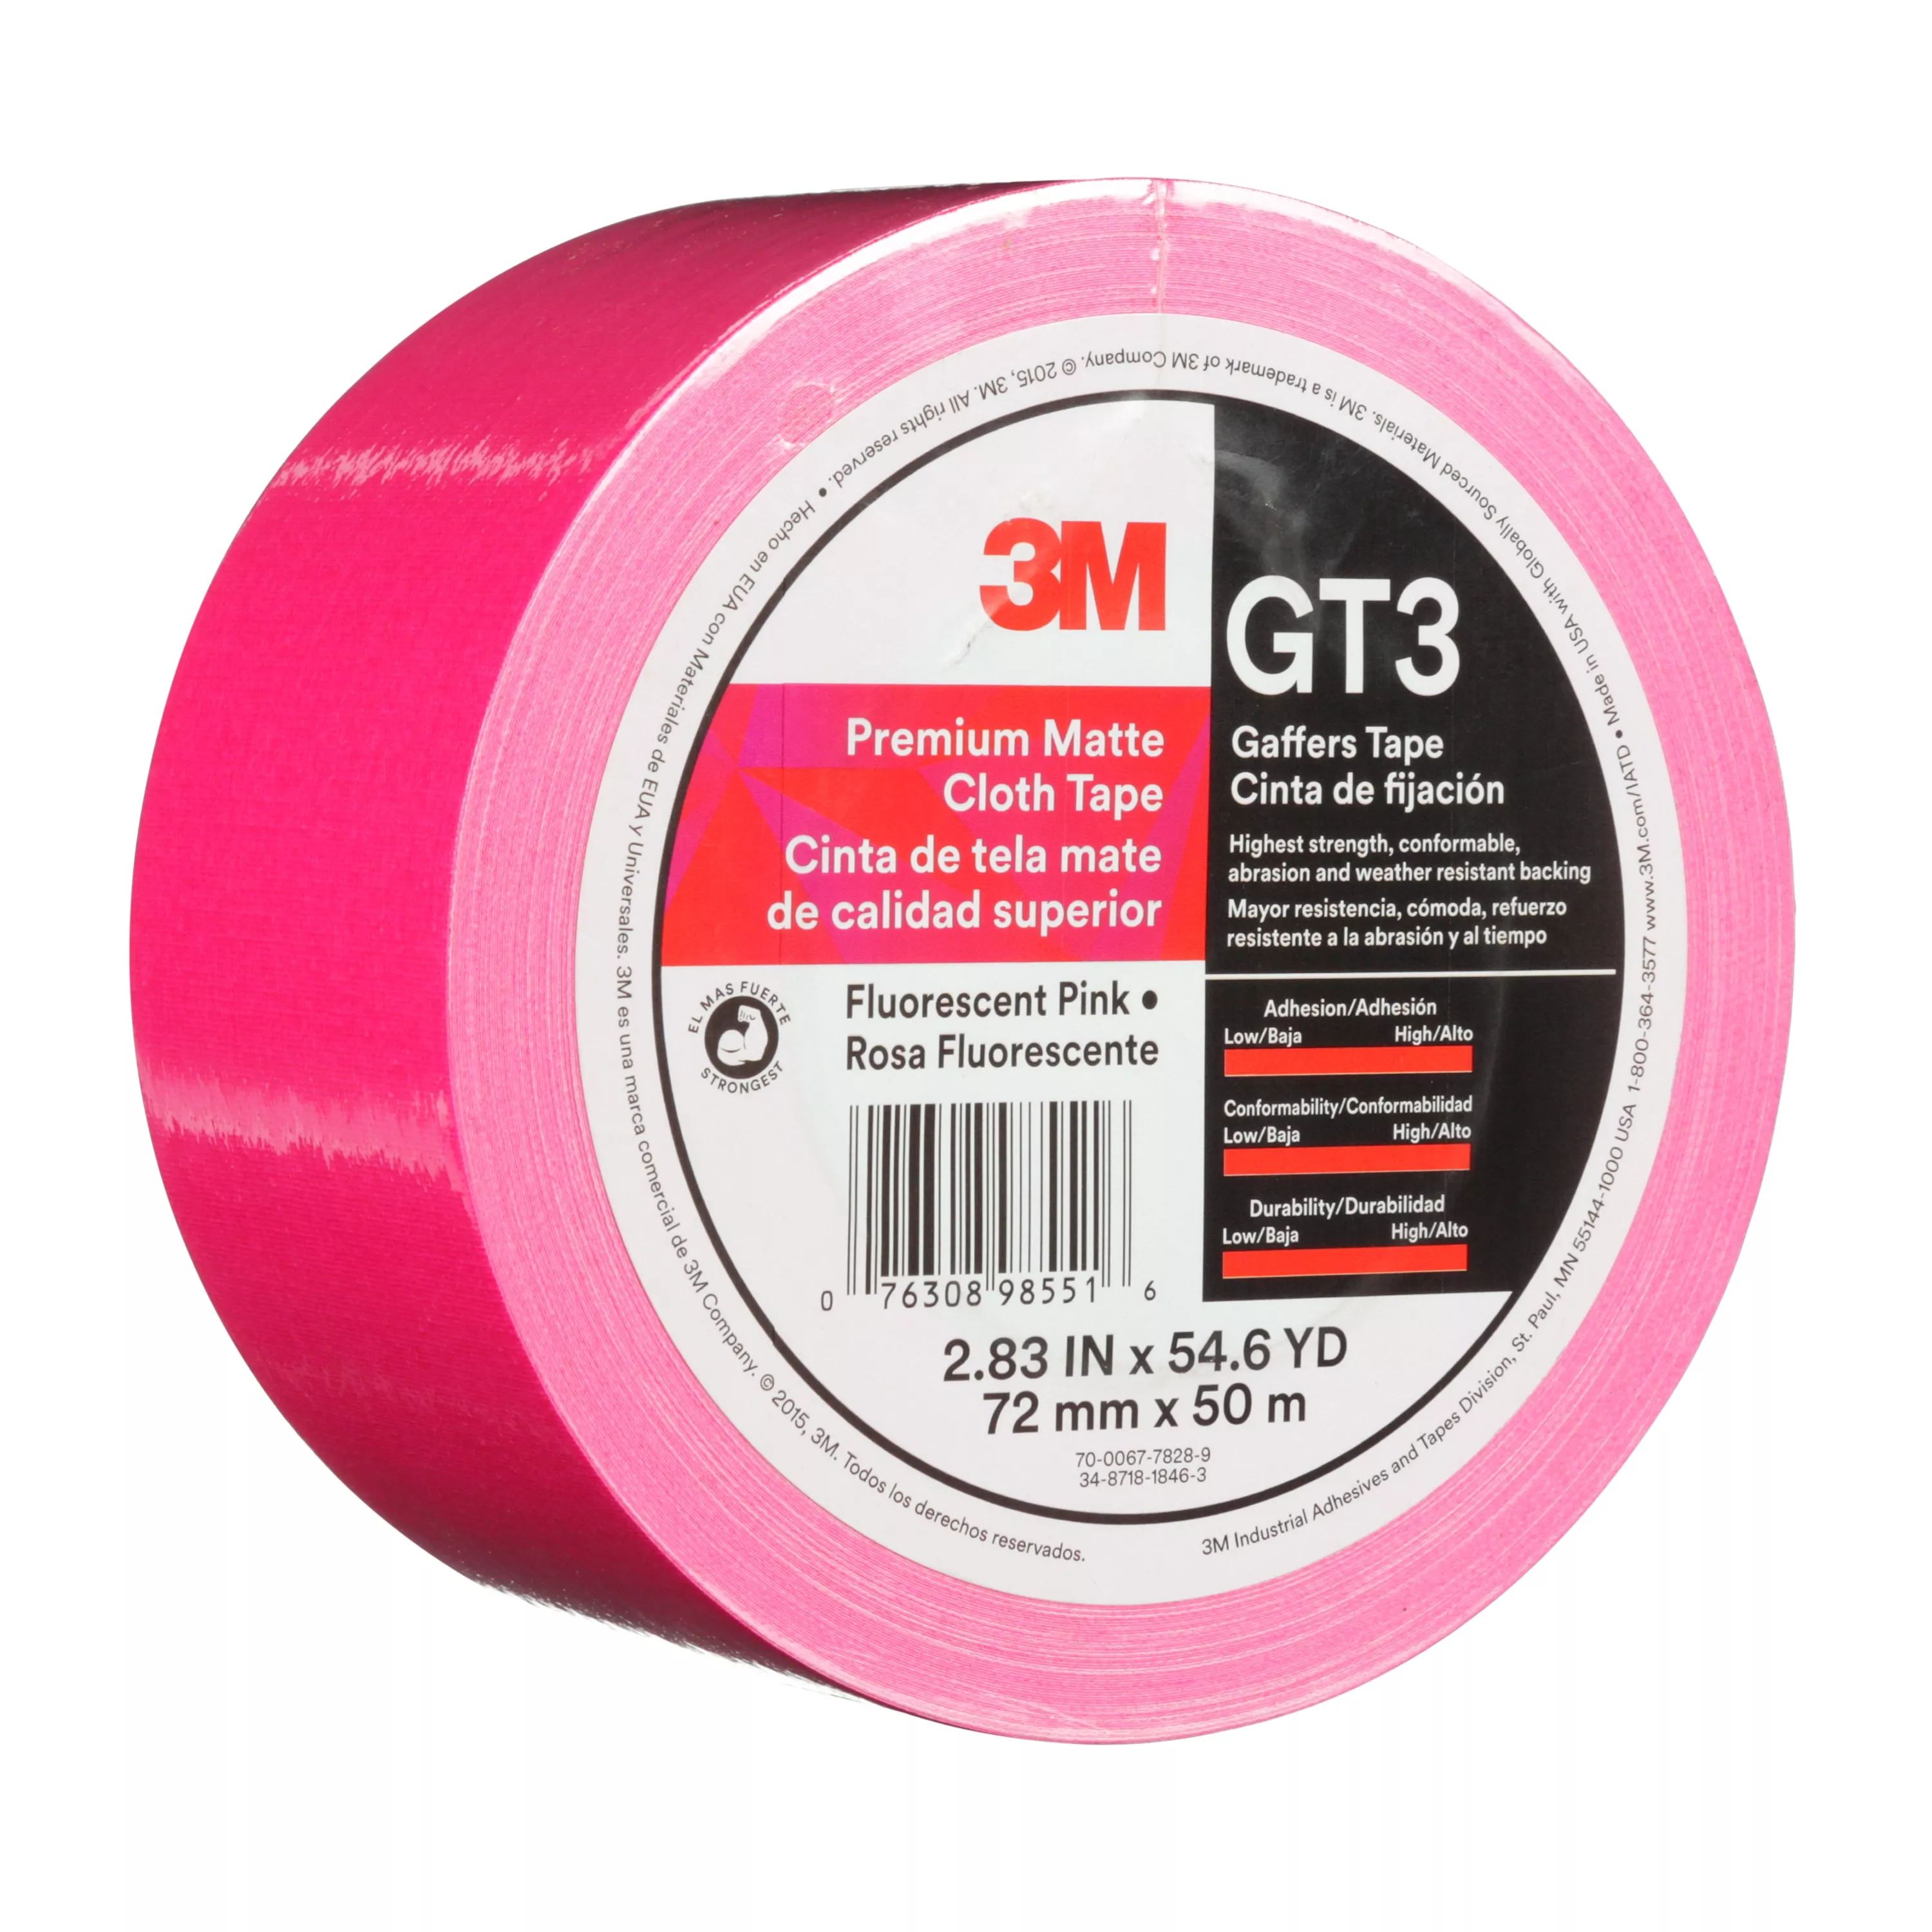 3M™ Premium Matte Cloth (Gaffers) Tape GT3, Fluorescent Pink, 72 mm x 50
m, 11 mil, 16/Case